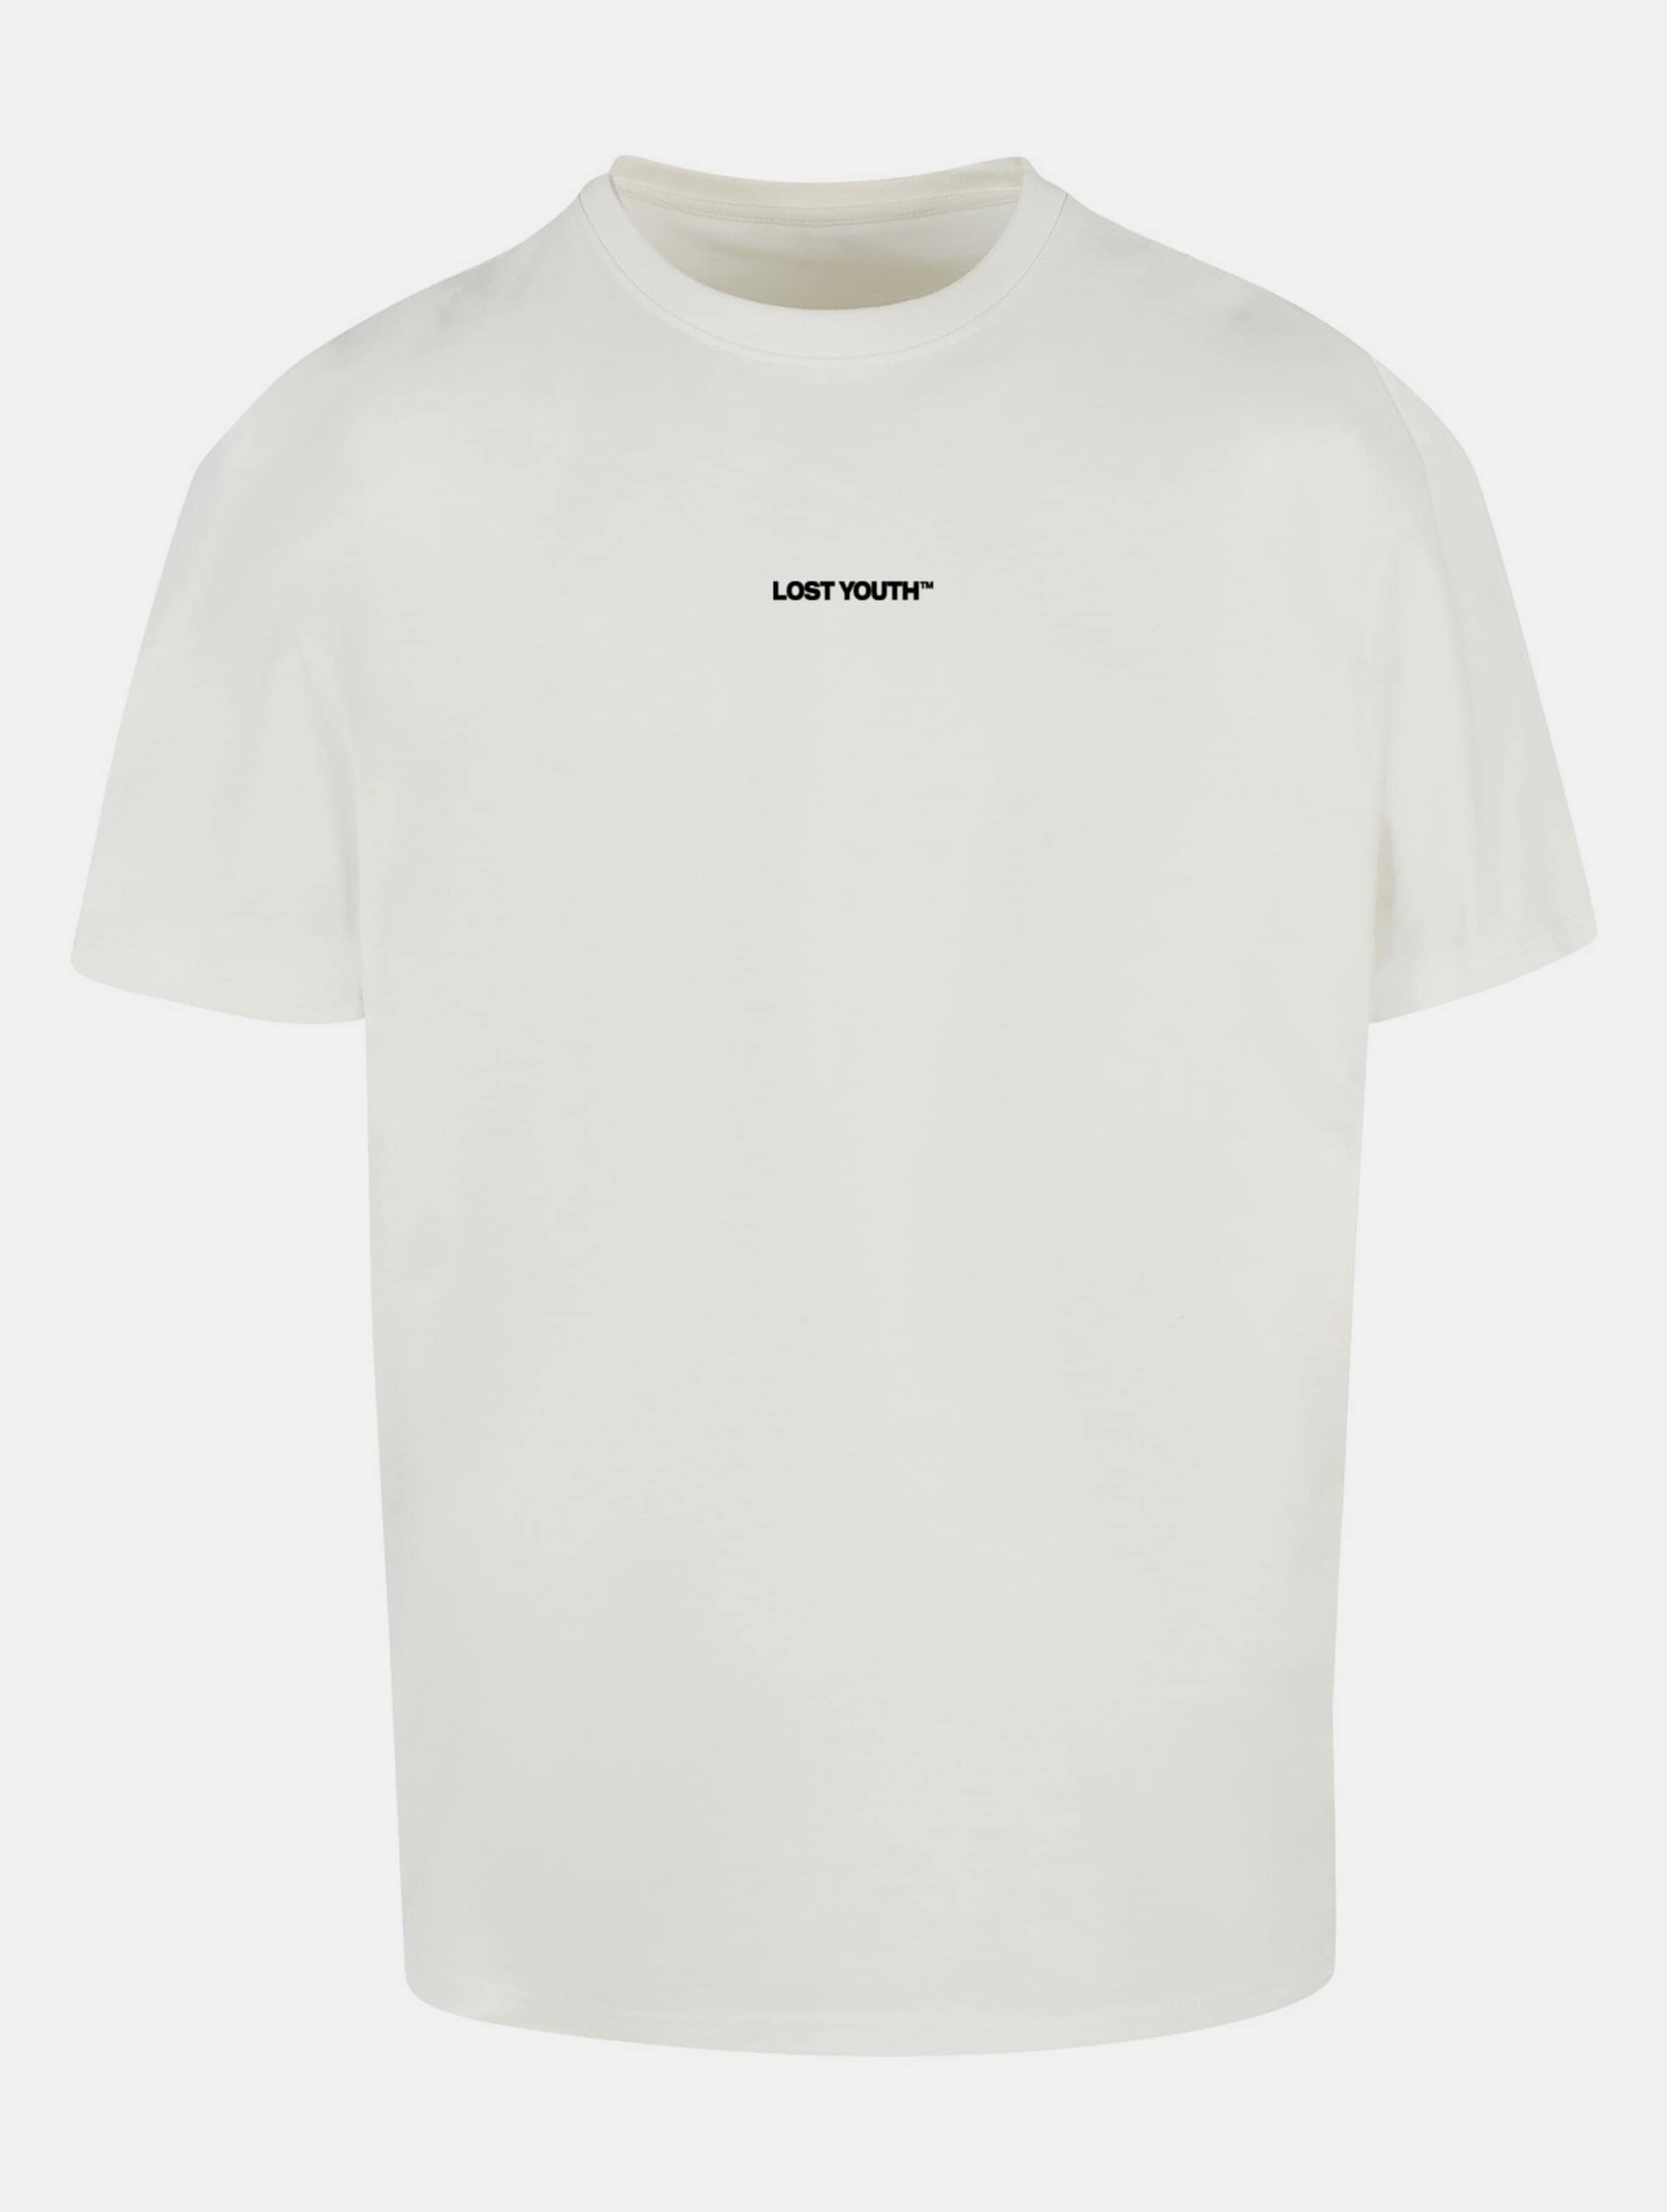 Lost Youth Chaos T-Shirts Männer,Unisex op kleur wit, Maat 4XL